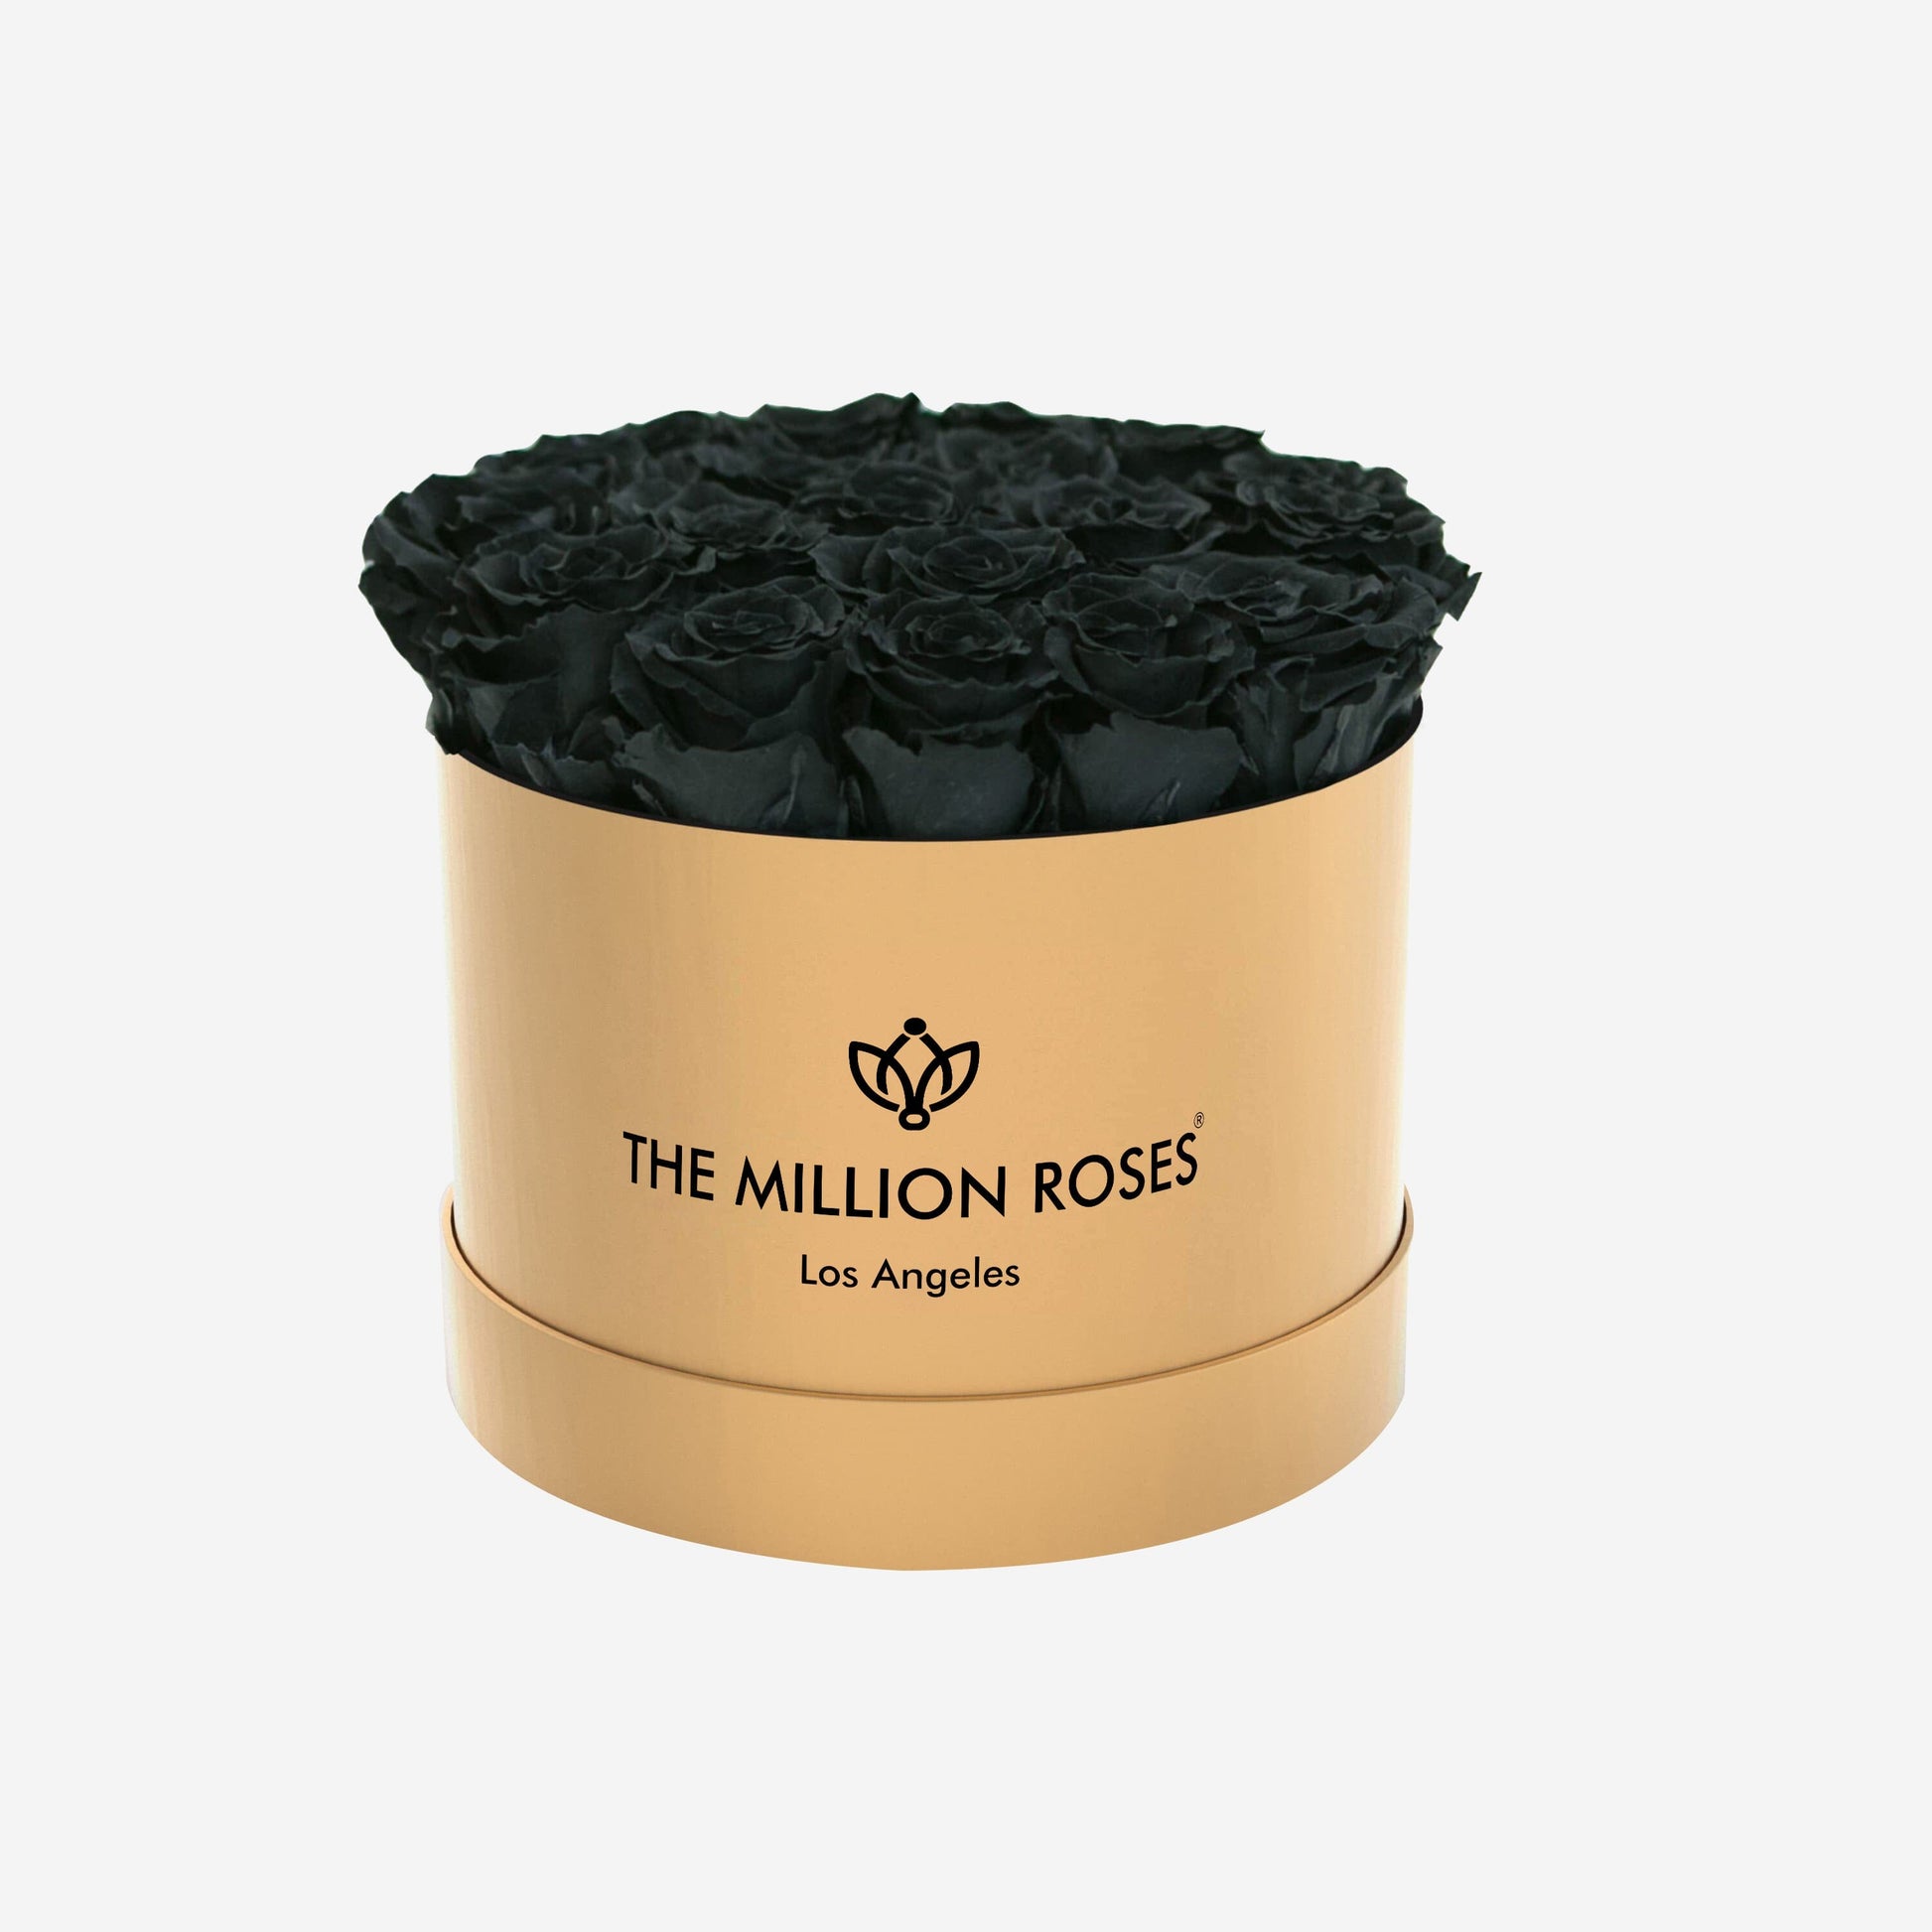 Classic Gold Box | Dark Green Roses - The Million Roses